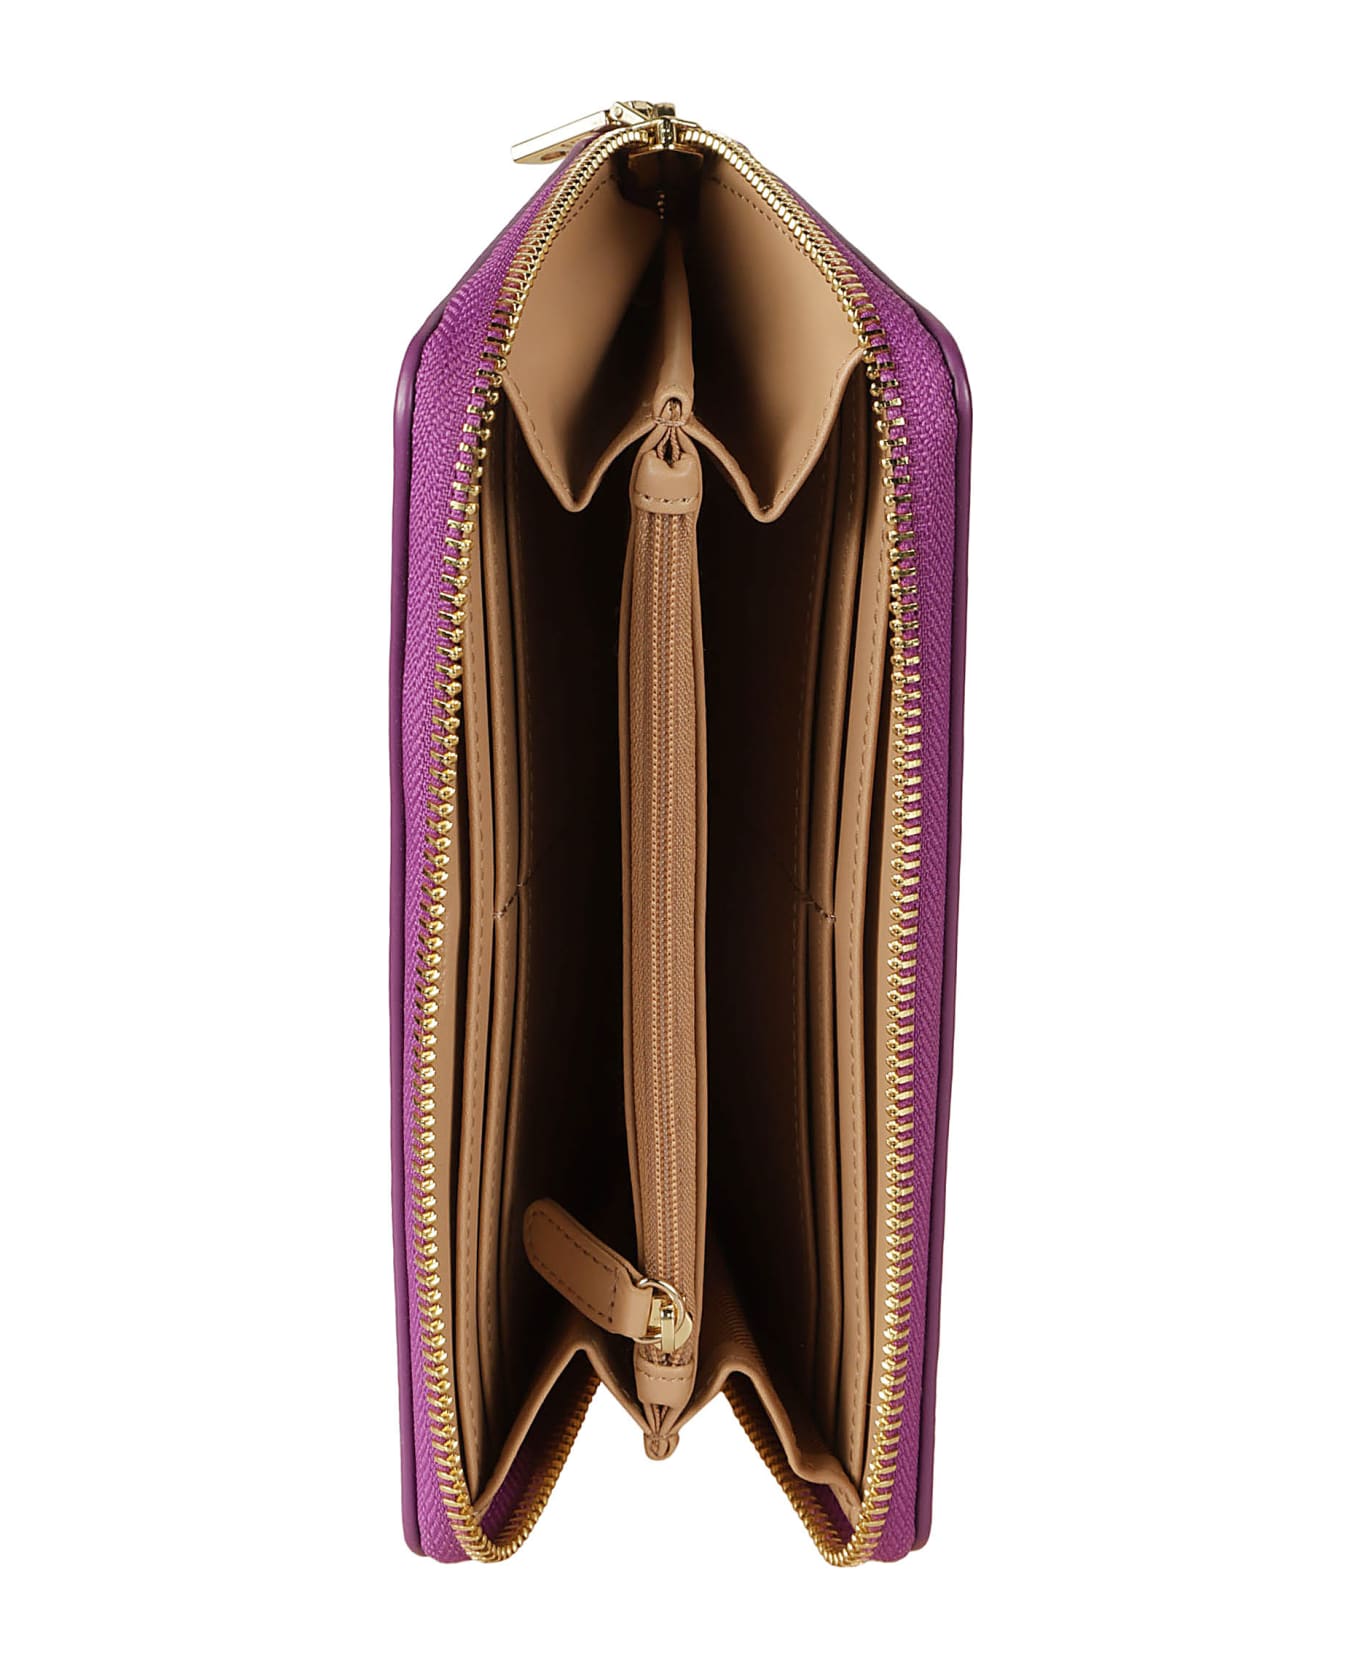 Love Moschino Logo Plaque Quilted Zip-around Wallet - Purple